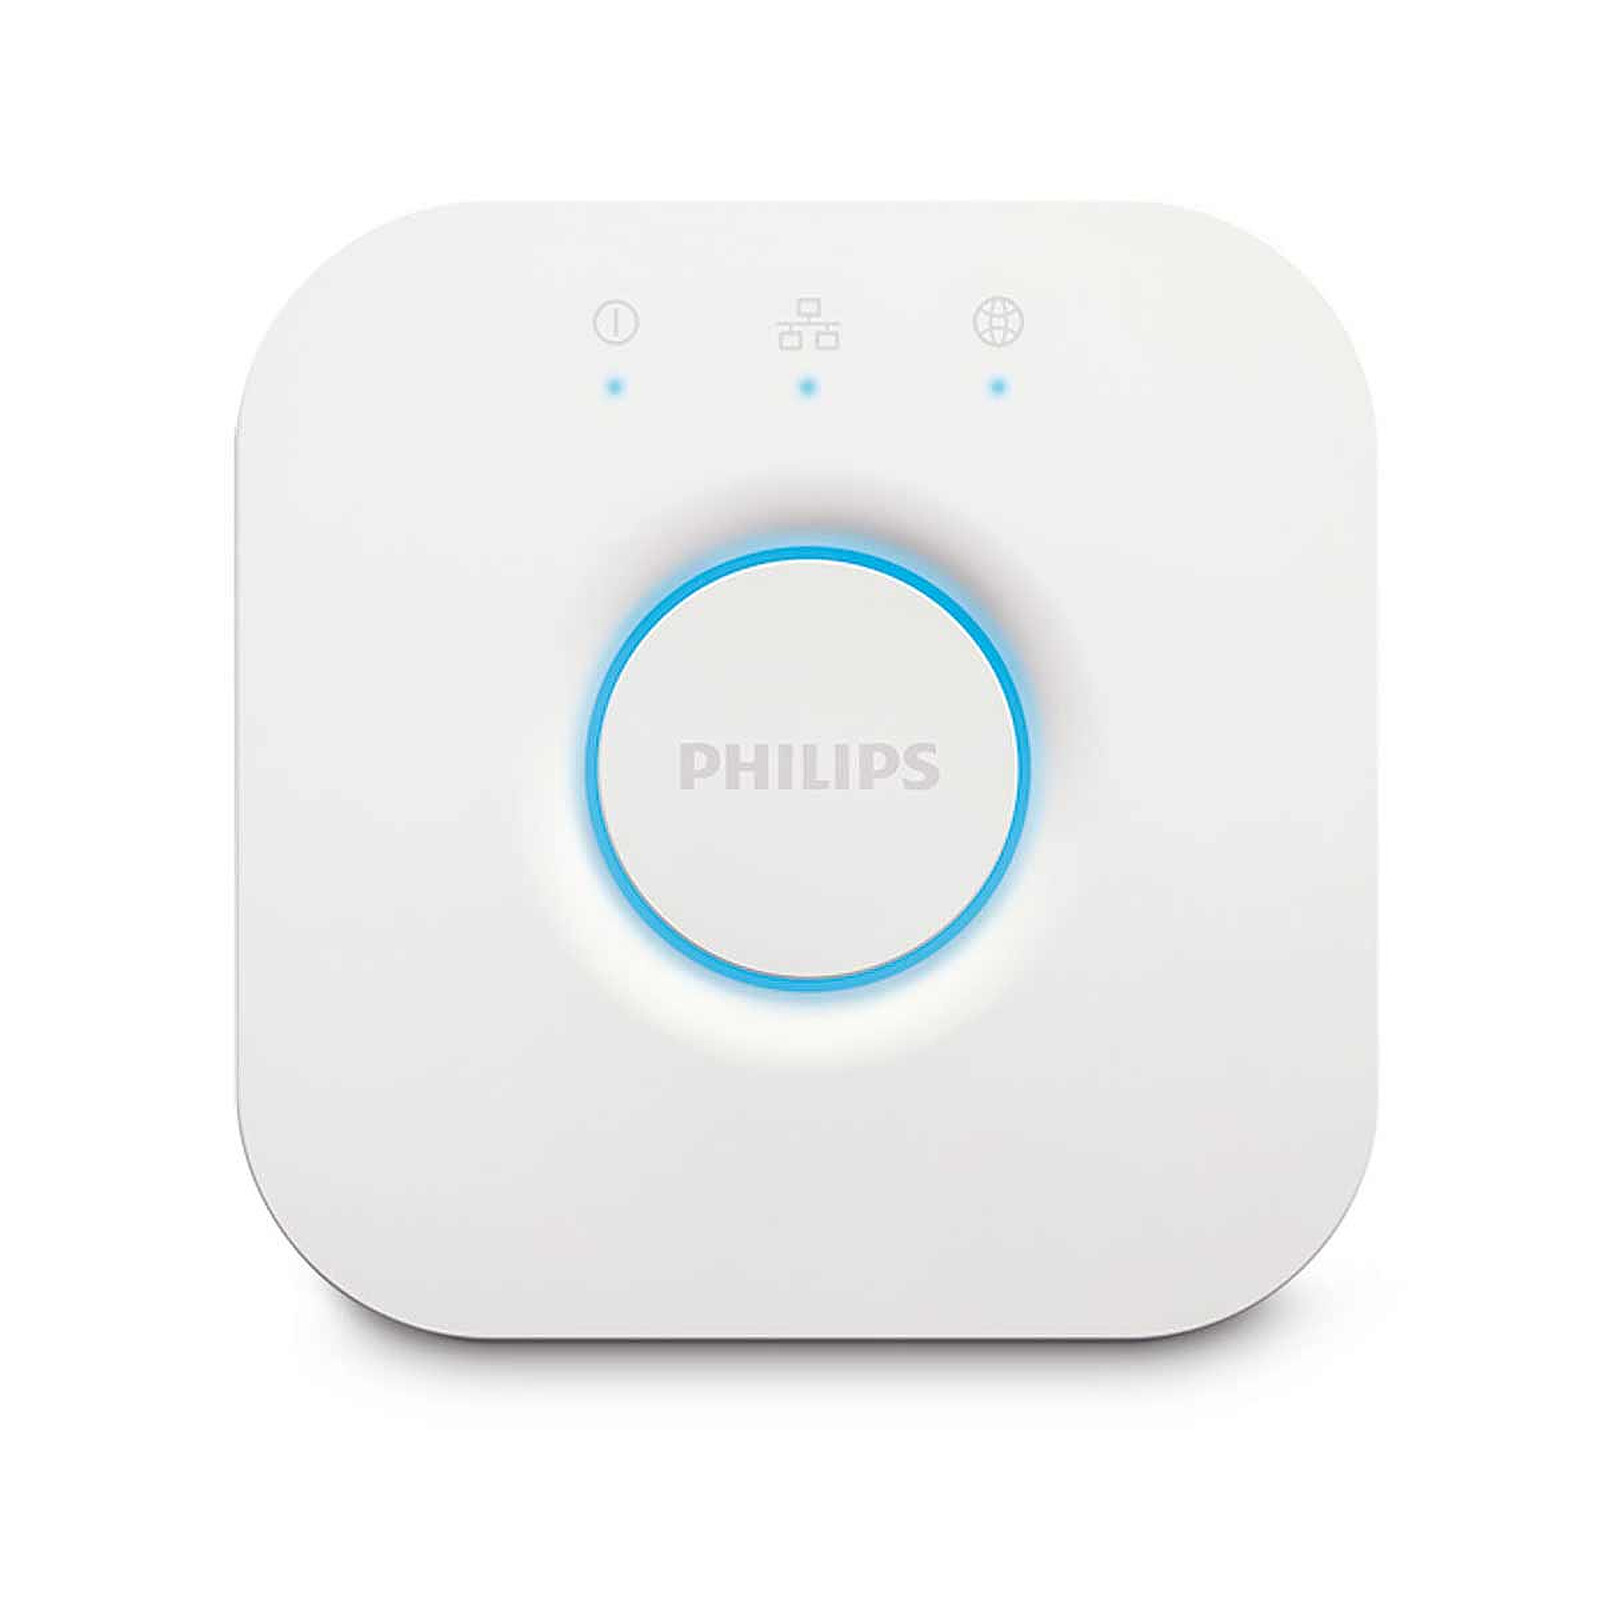 Philips Hue Personal Wireless Lighting Bridge, Apple Homekit Enabled